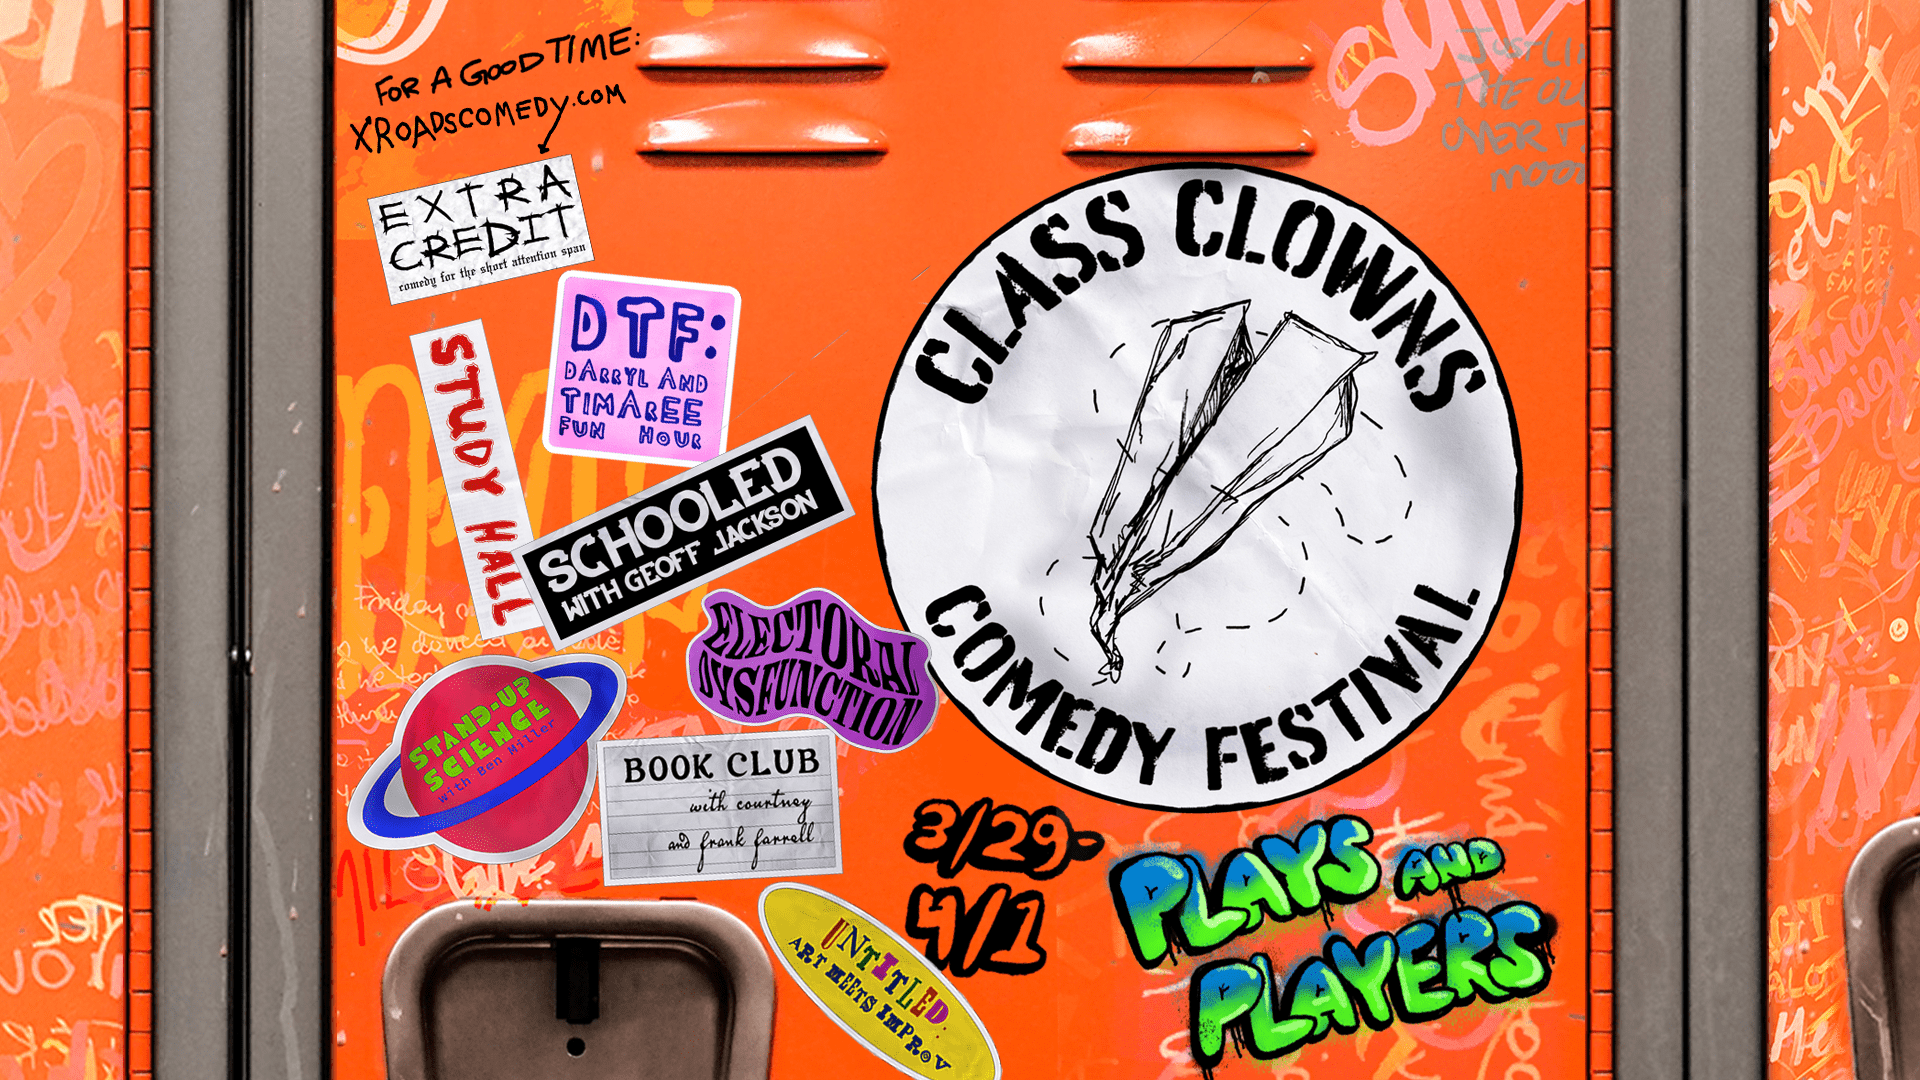 Announcing the Class Clowns Comedy Festival!